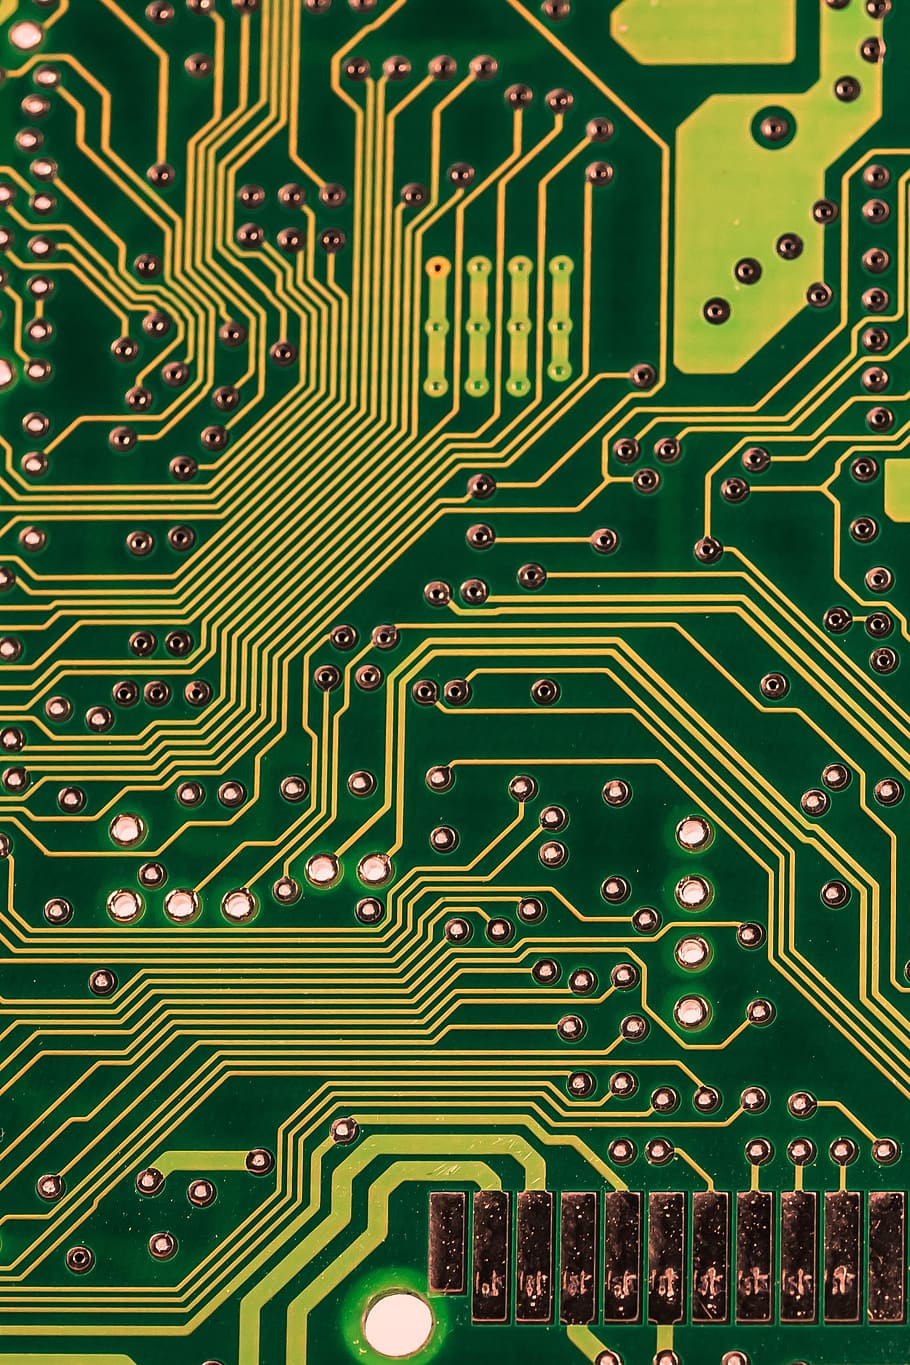 HD wallpaper: green and black circuit board, computer, chip, data processing